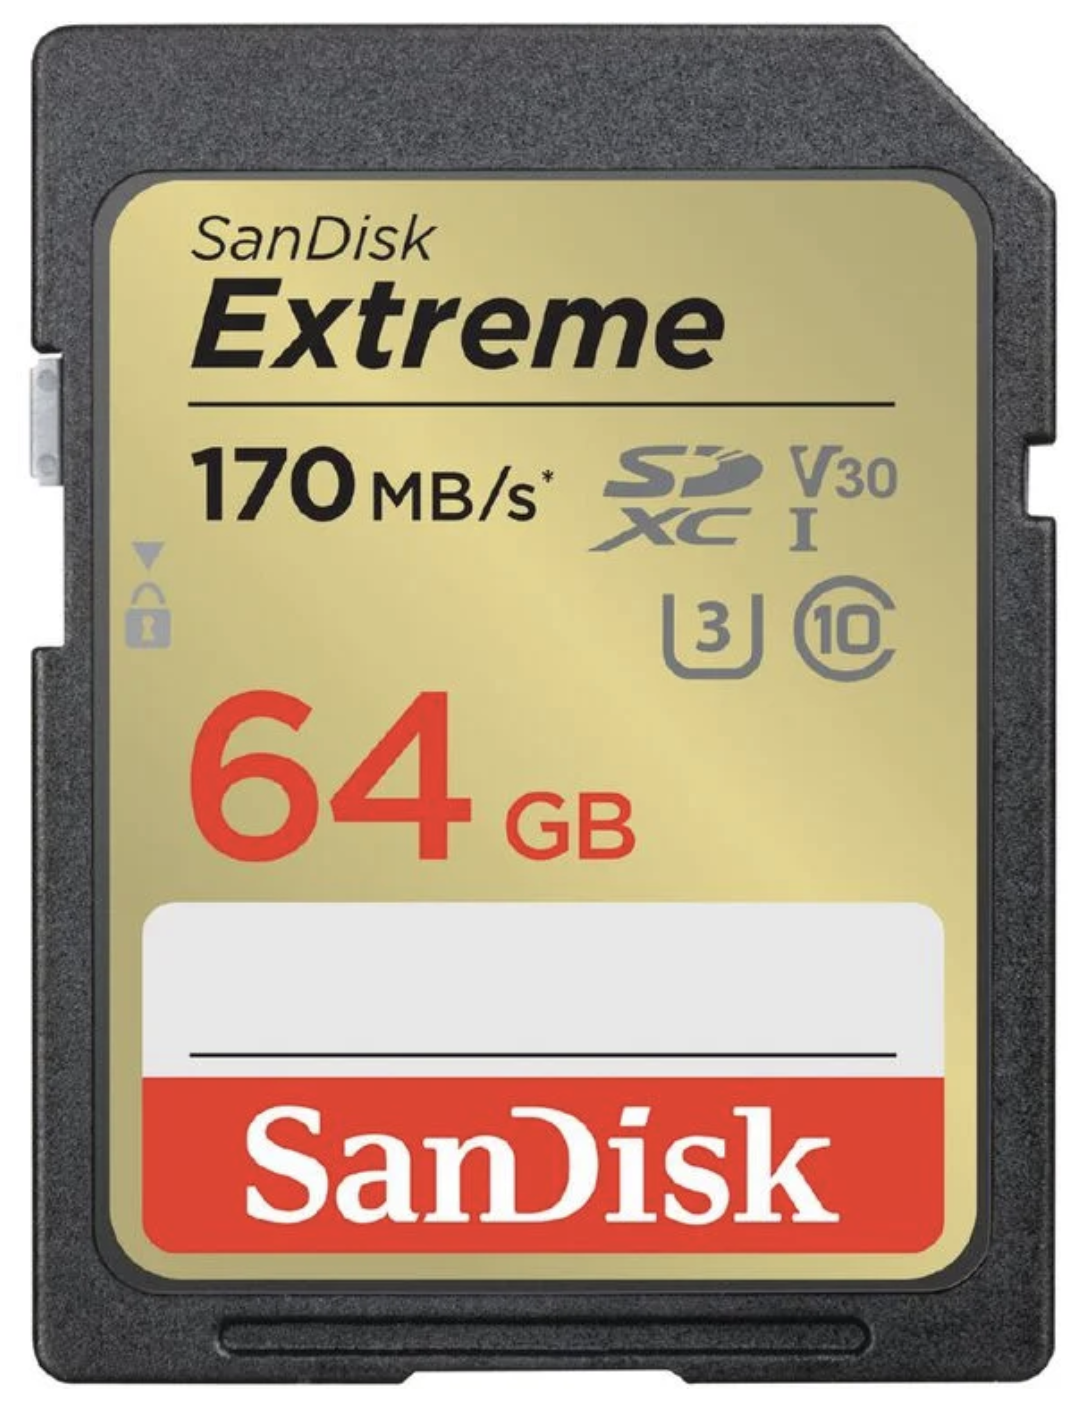 Sandisk SD Extreme SDHC/SDXC Memory Card - 64GB